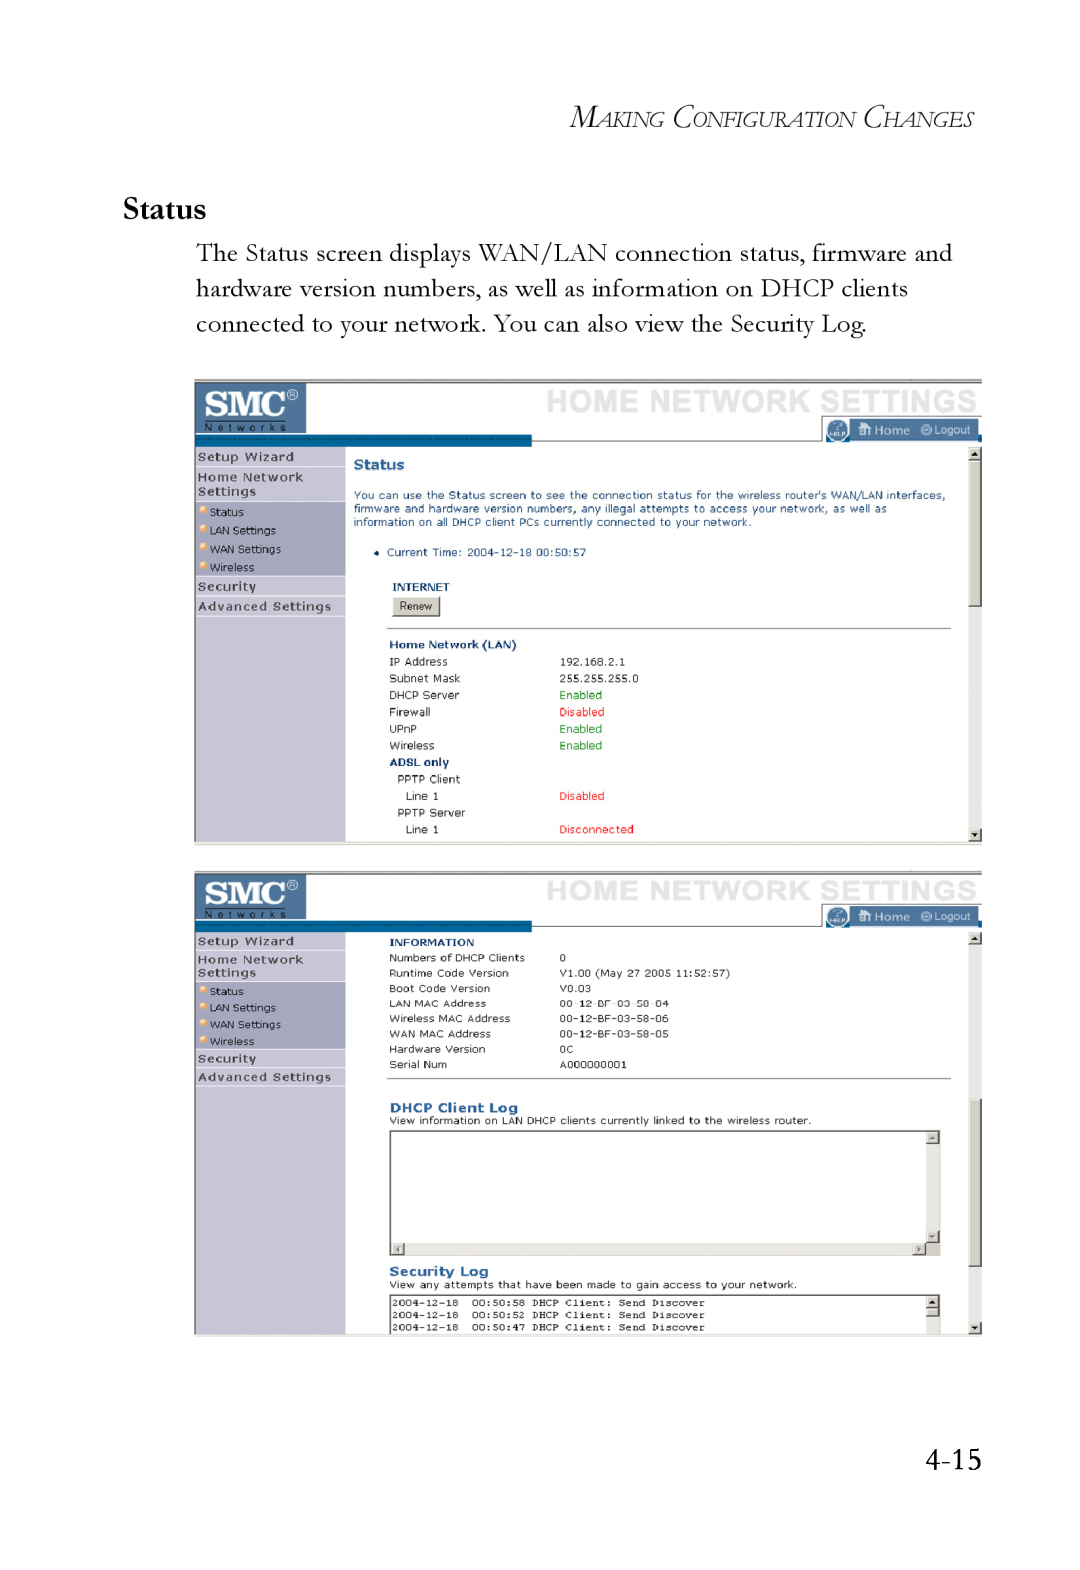 SMC Networks SMCWBR14T-G manual 4-15, Status, Making Configuration Changes 